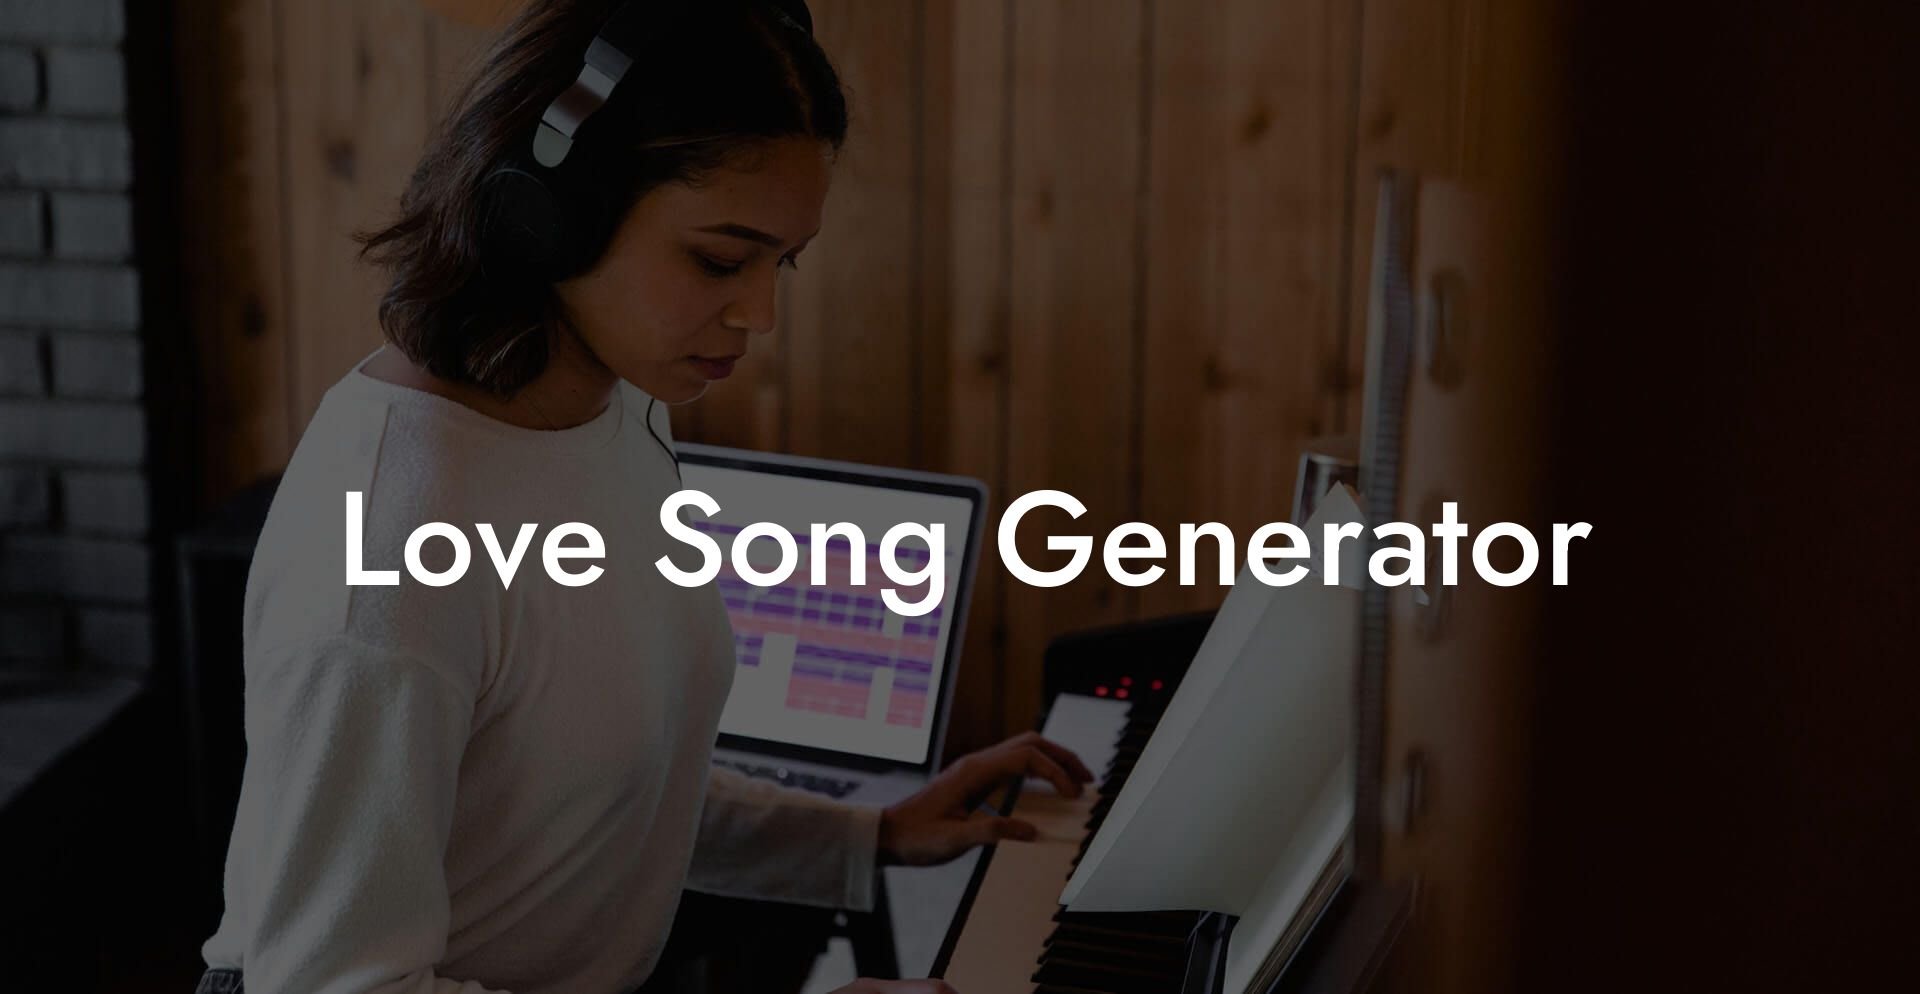 love song generator lyric assistant